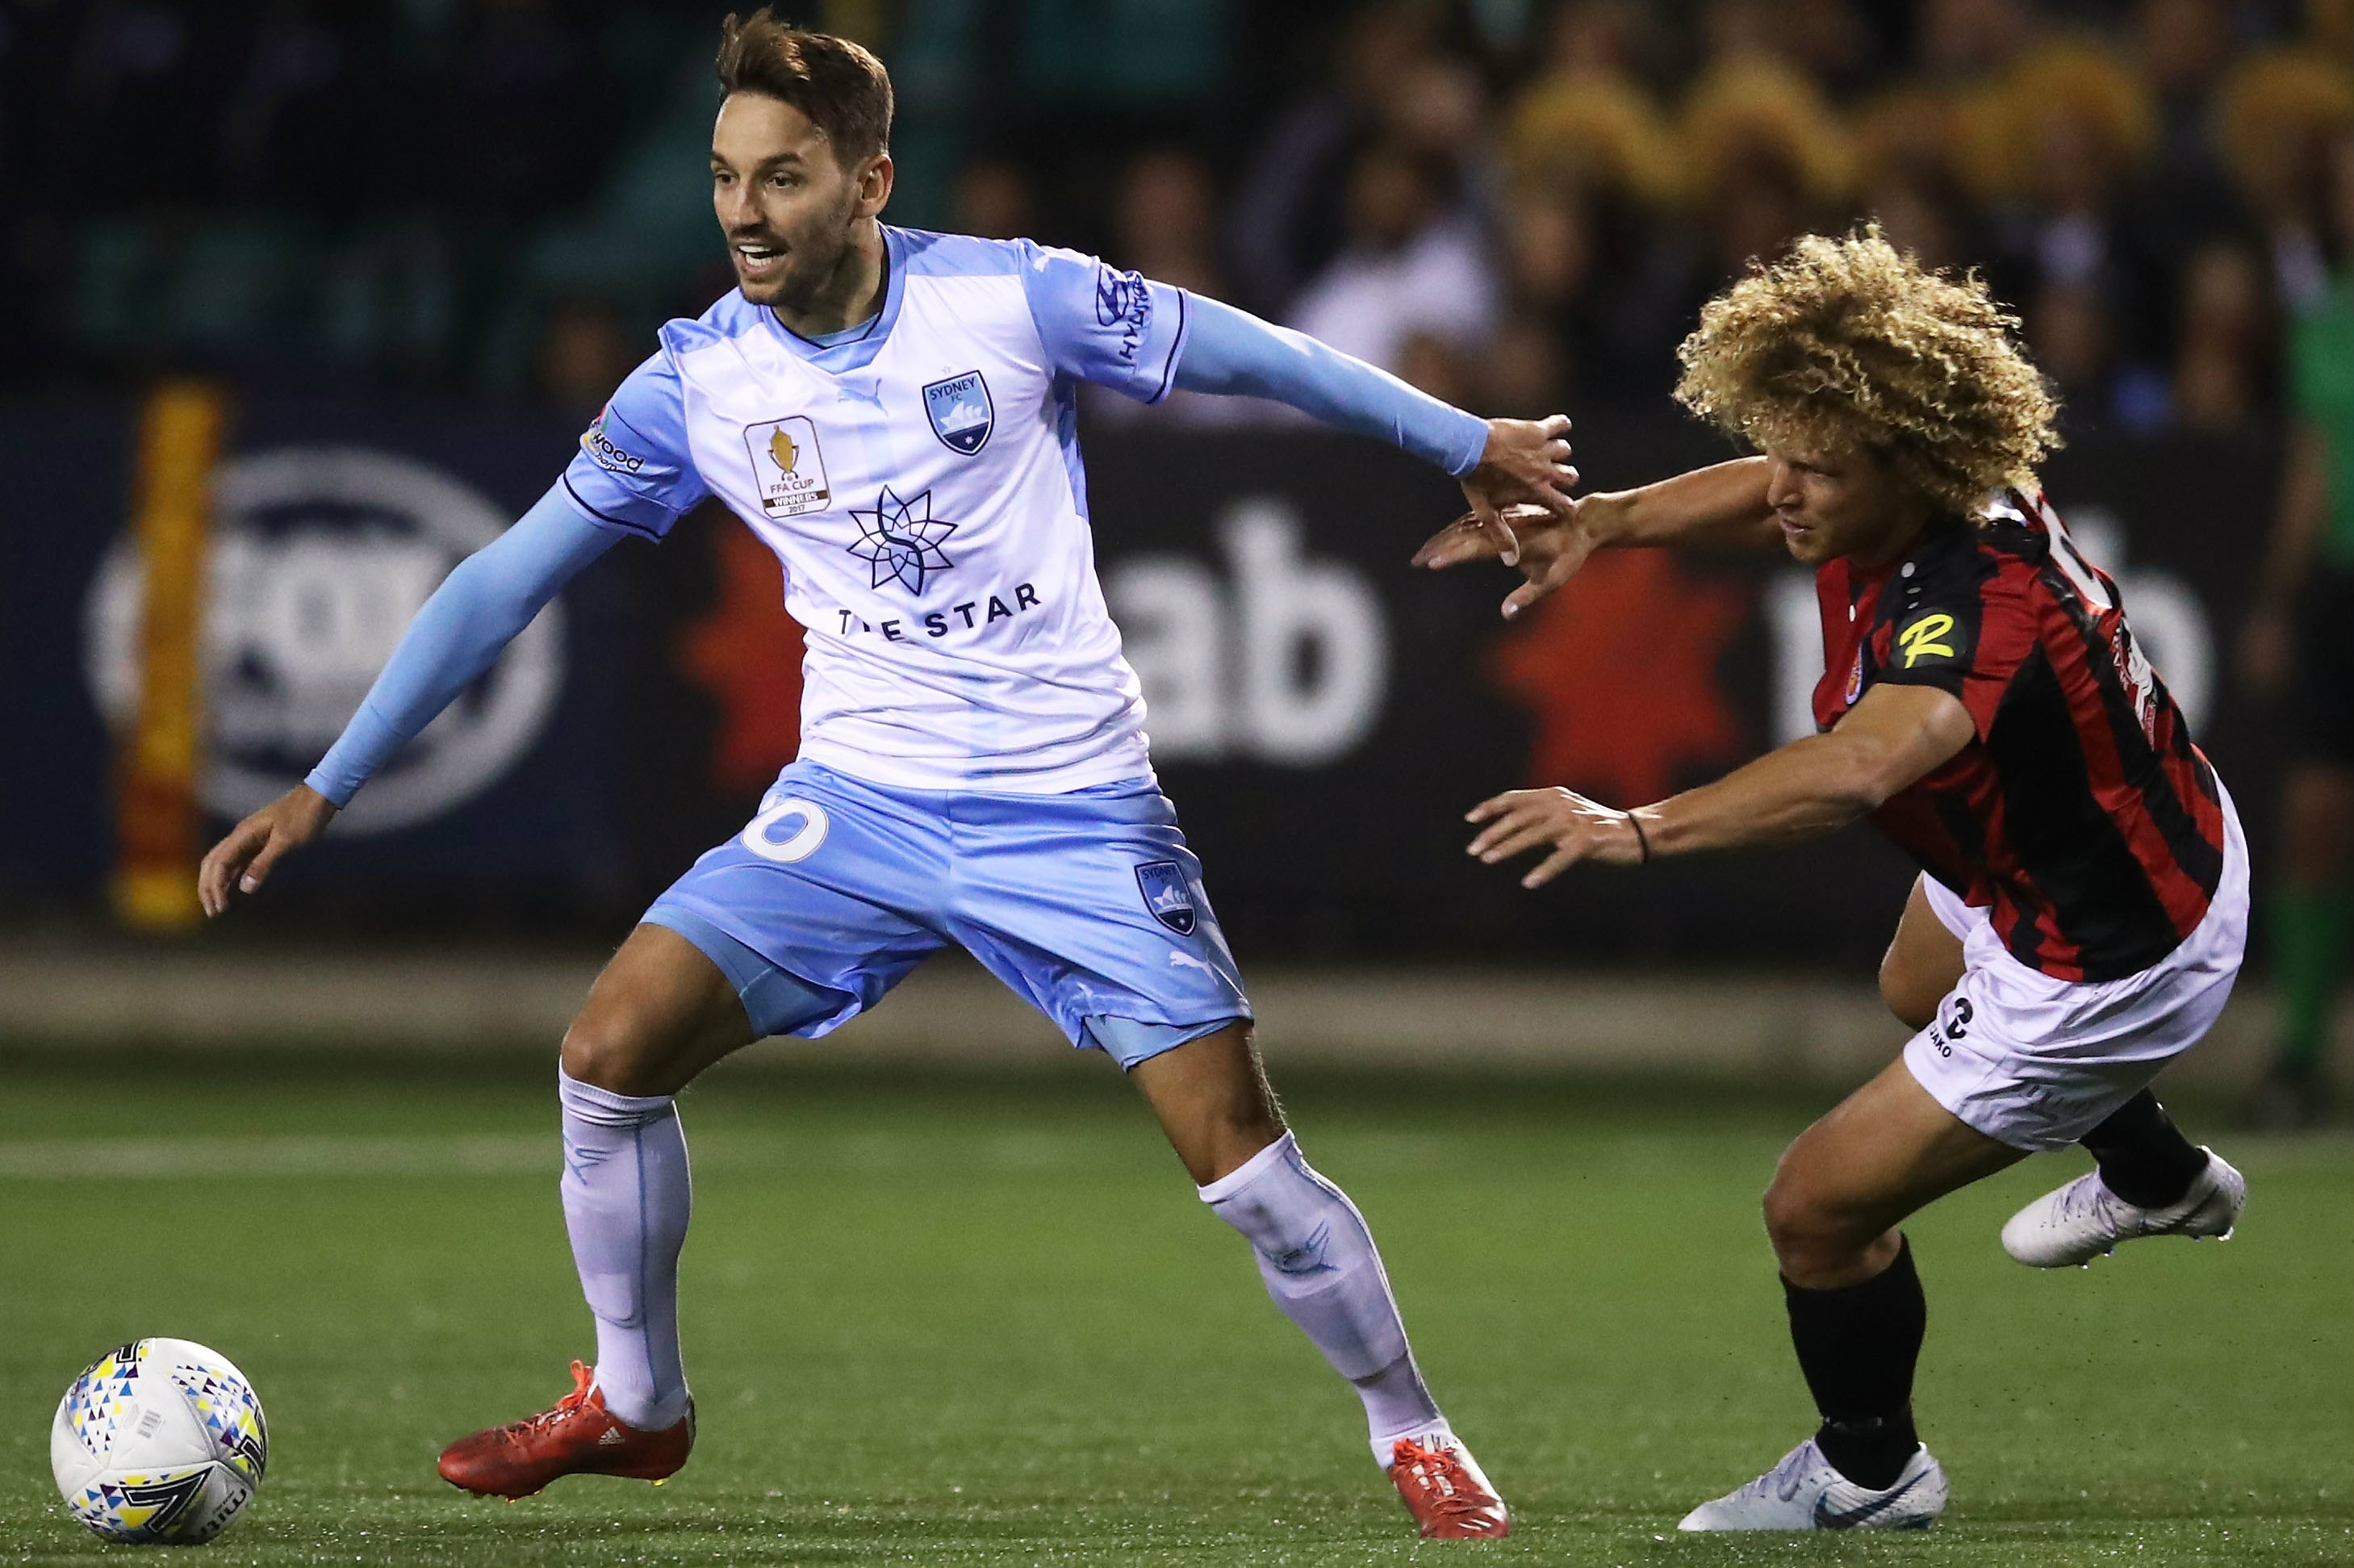 Sydney FC's Milos Ninkovic takes on Rockdale's Blake Ricciuto.